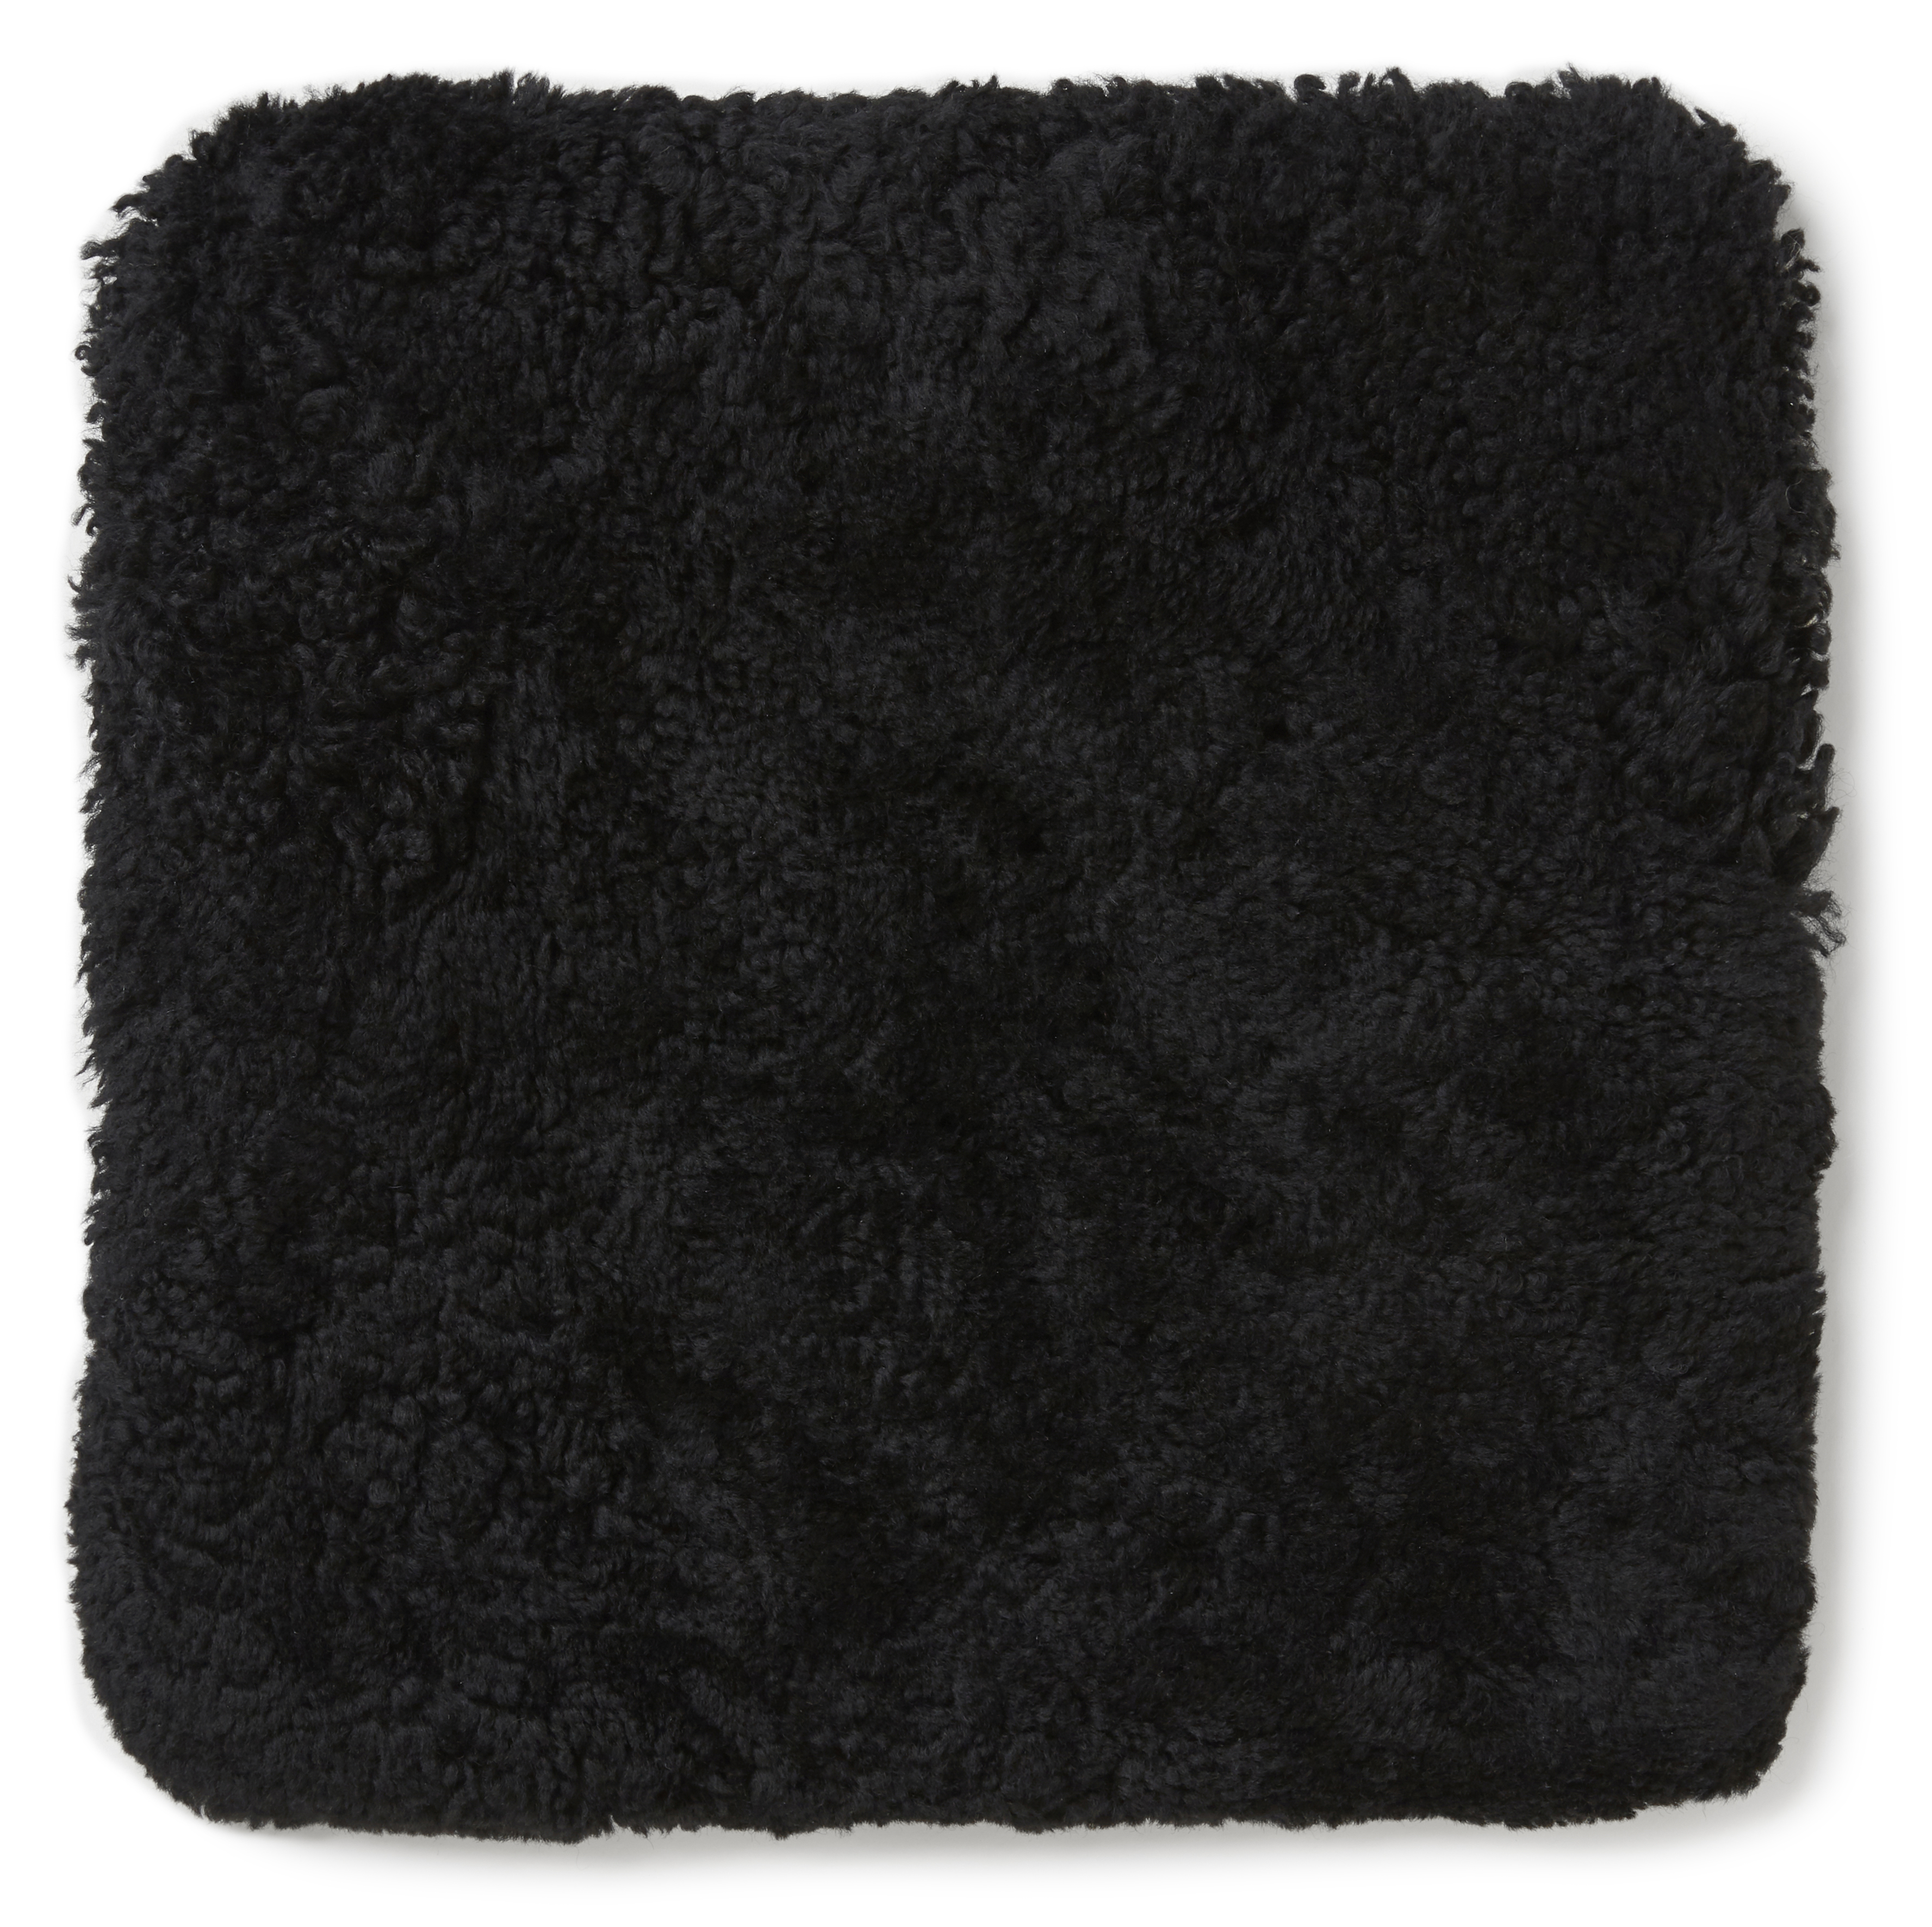 Skinnwille Curly Seat Cover Sheepskin 40x40cm Black